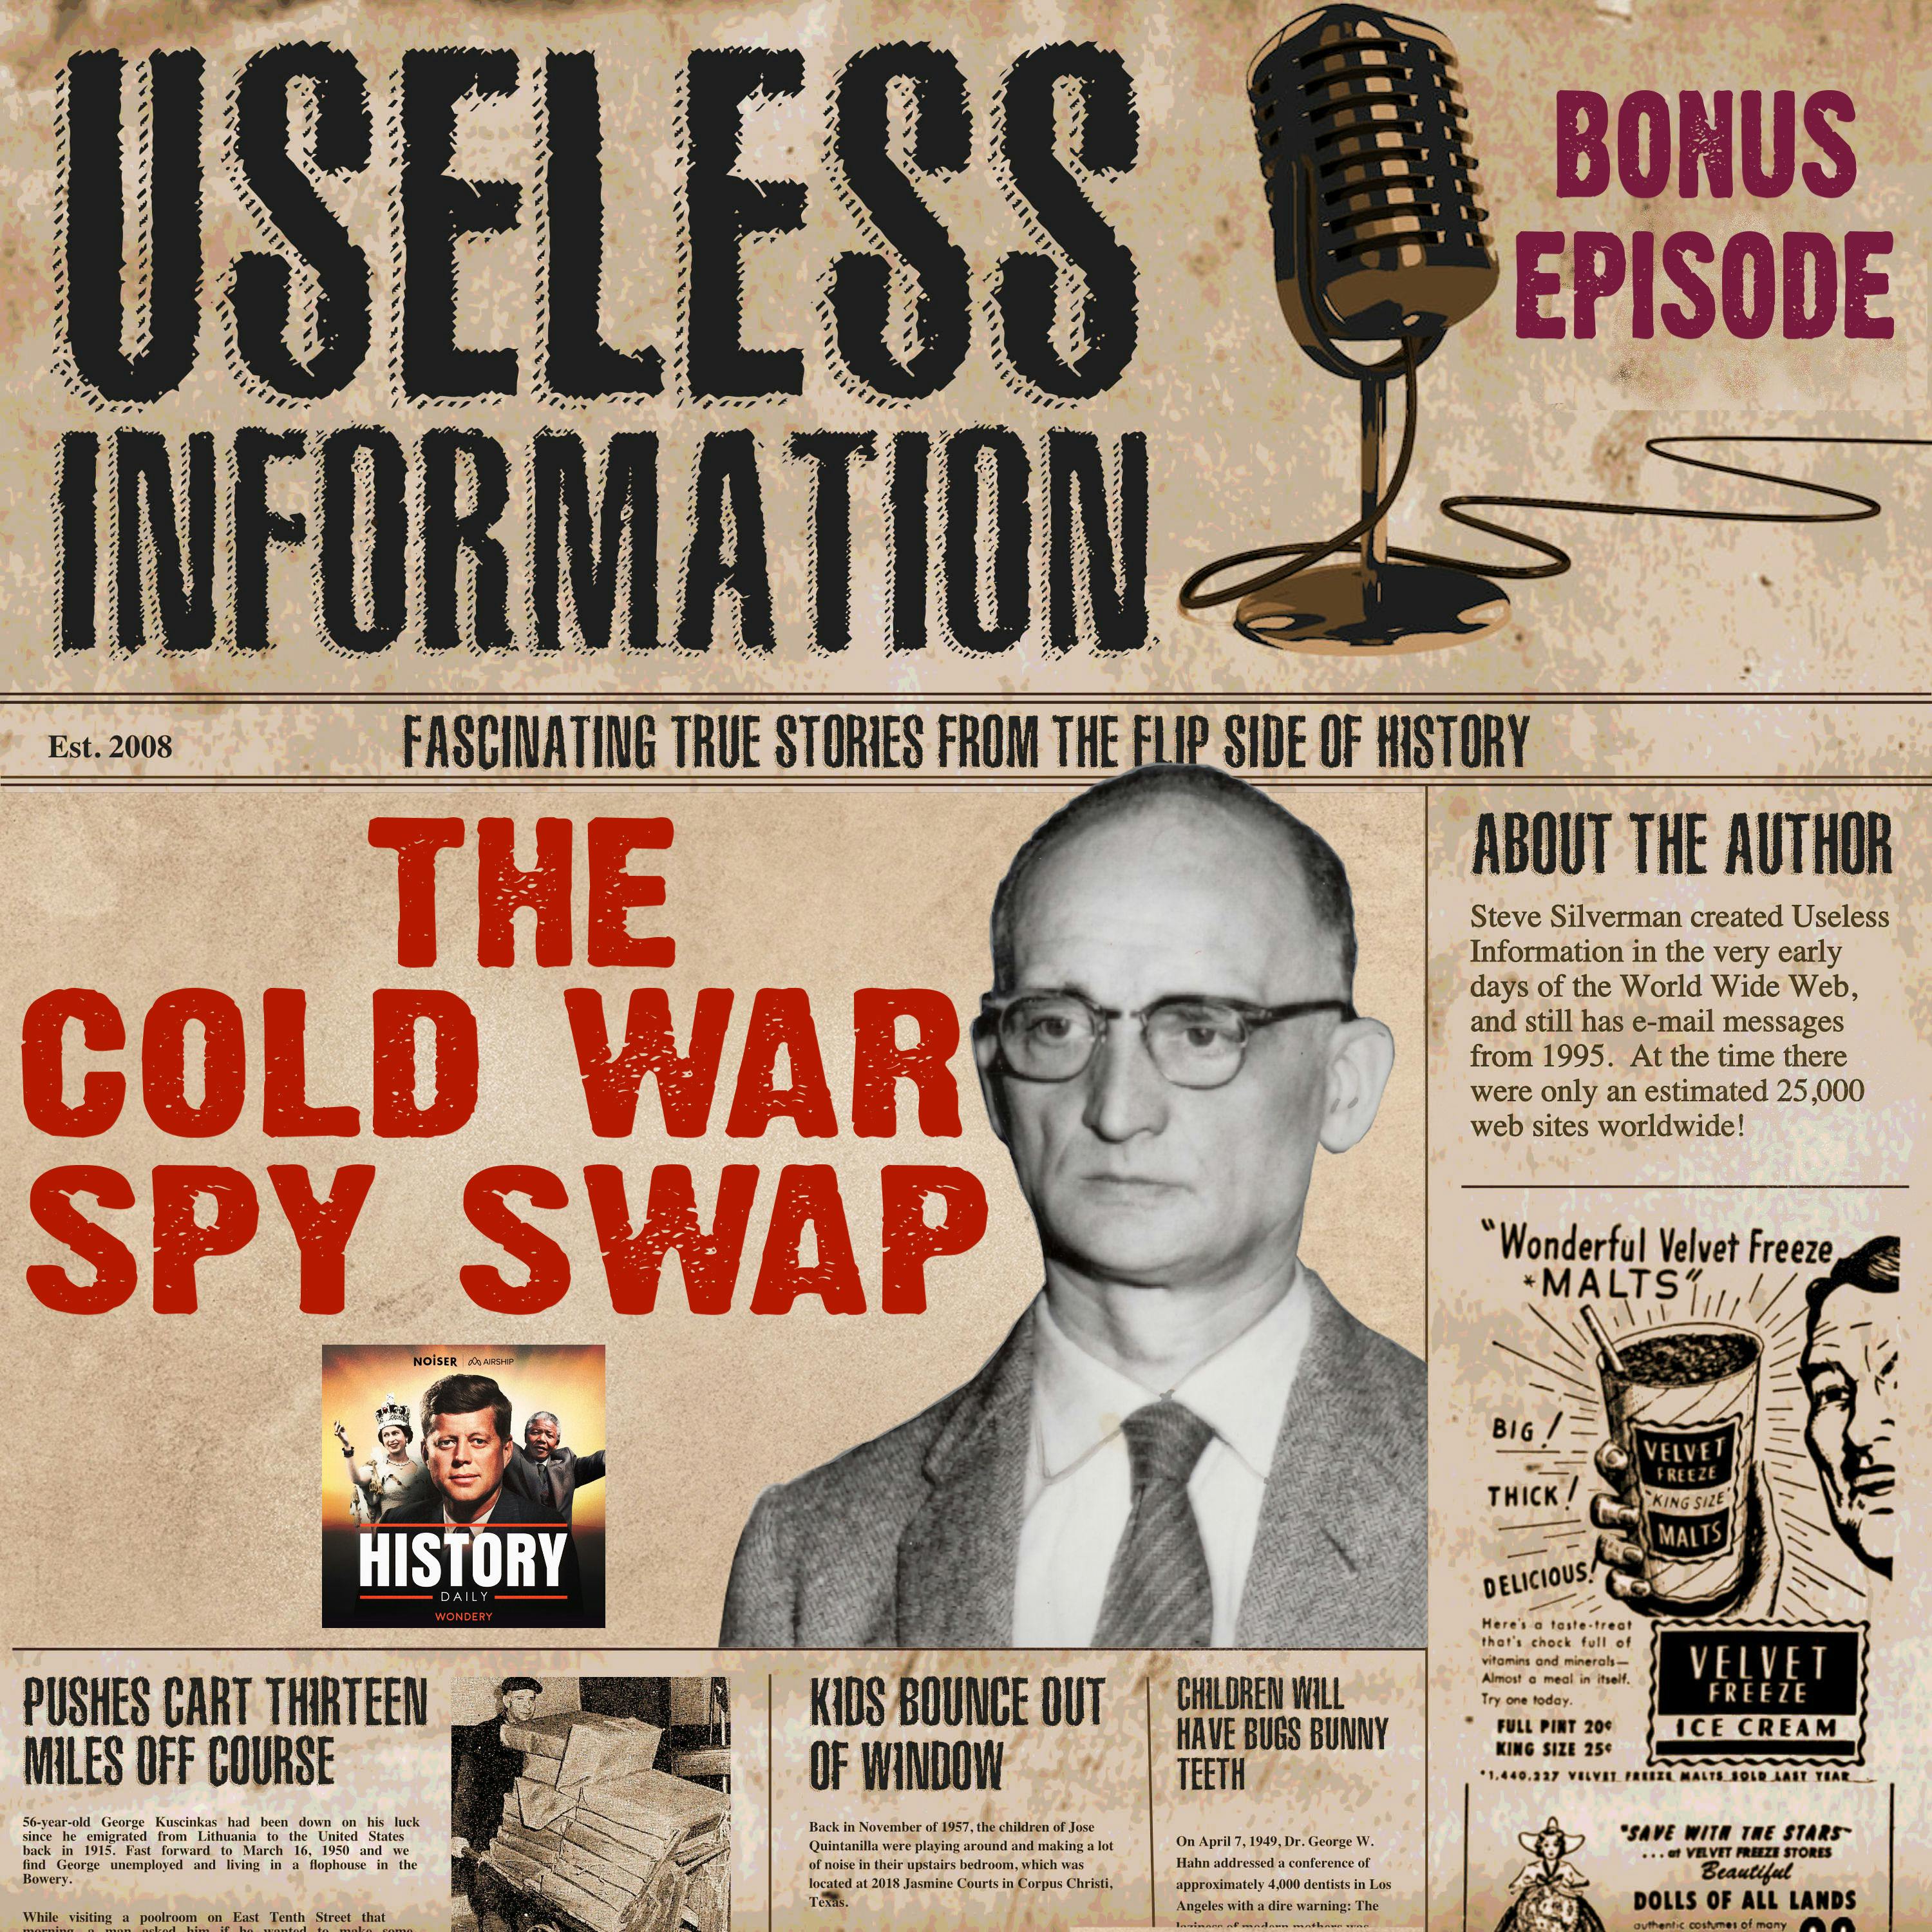 Bonus Episode: The Cold War Spy Swap